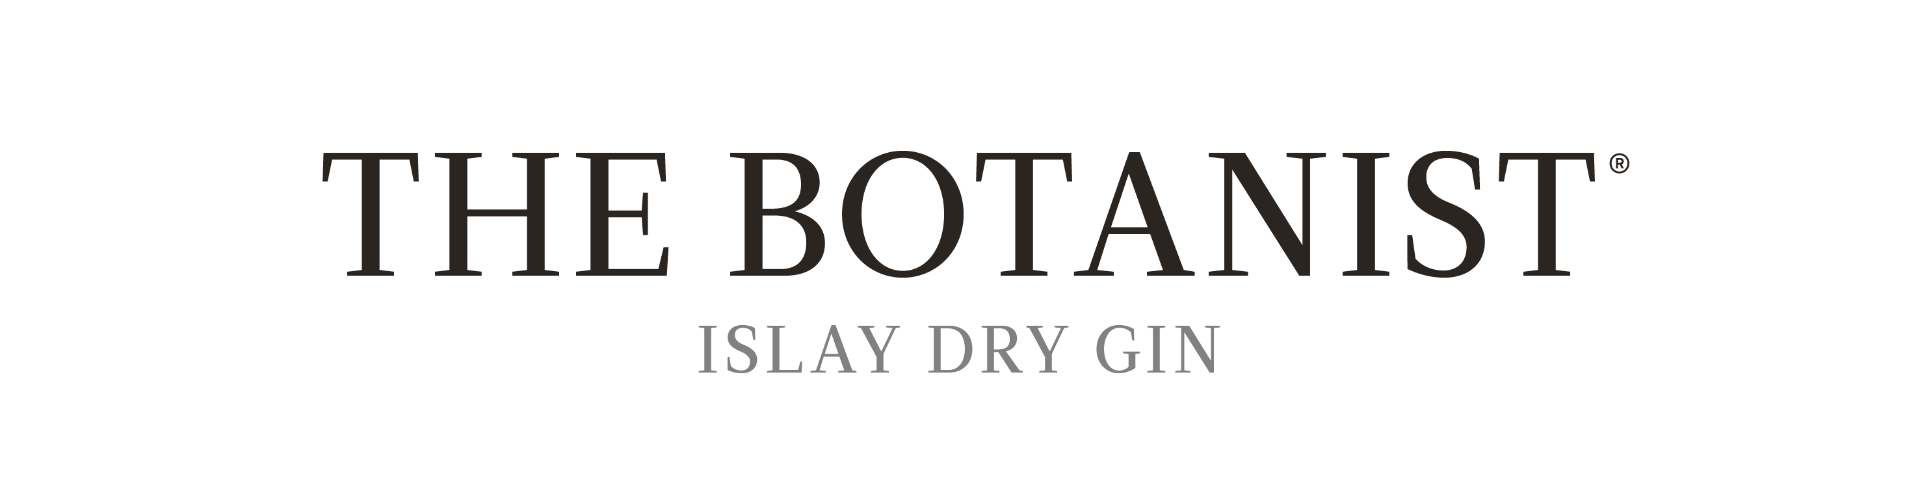 The Botanist-Logo-The Botanist Logo.png